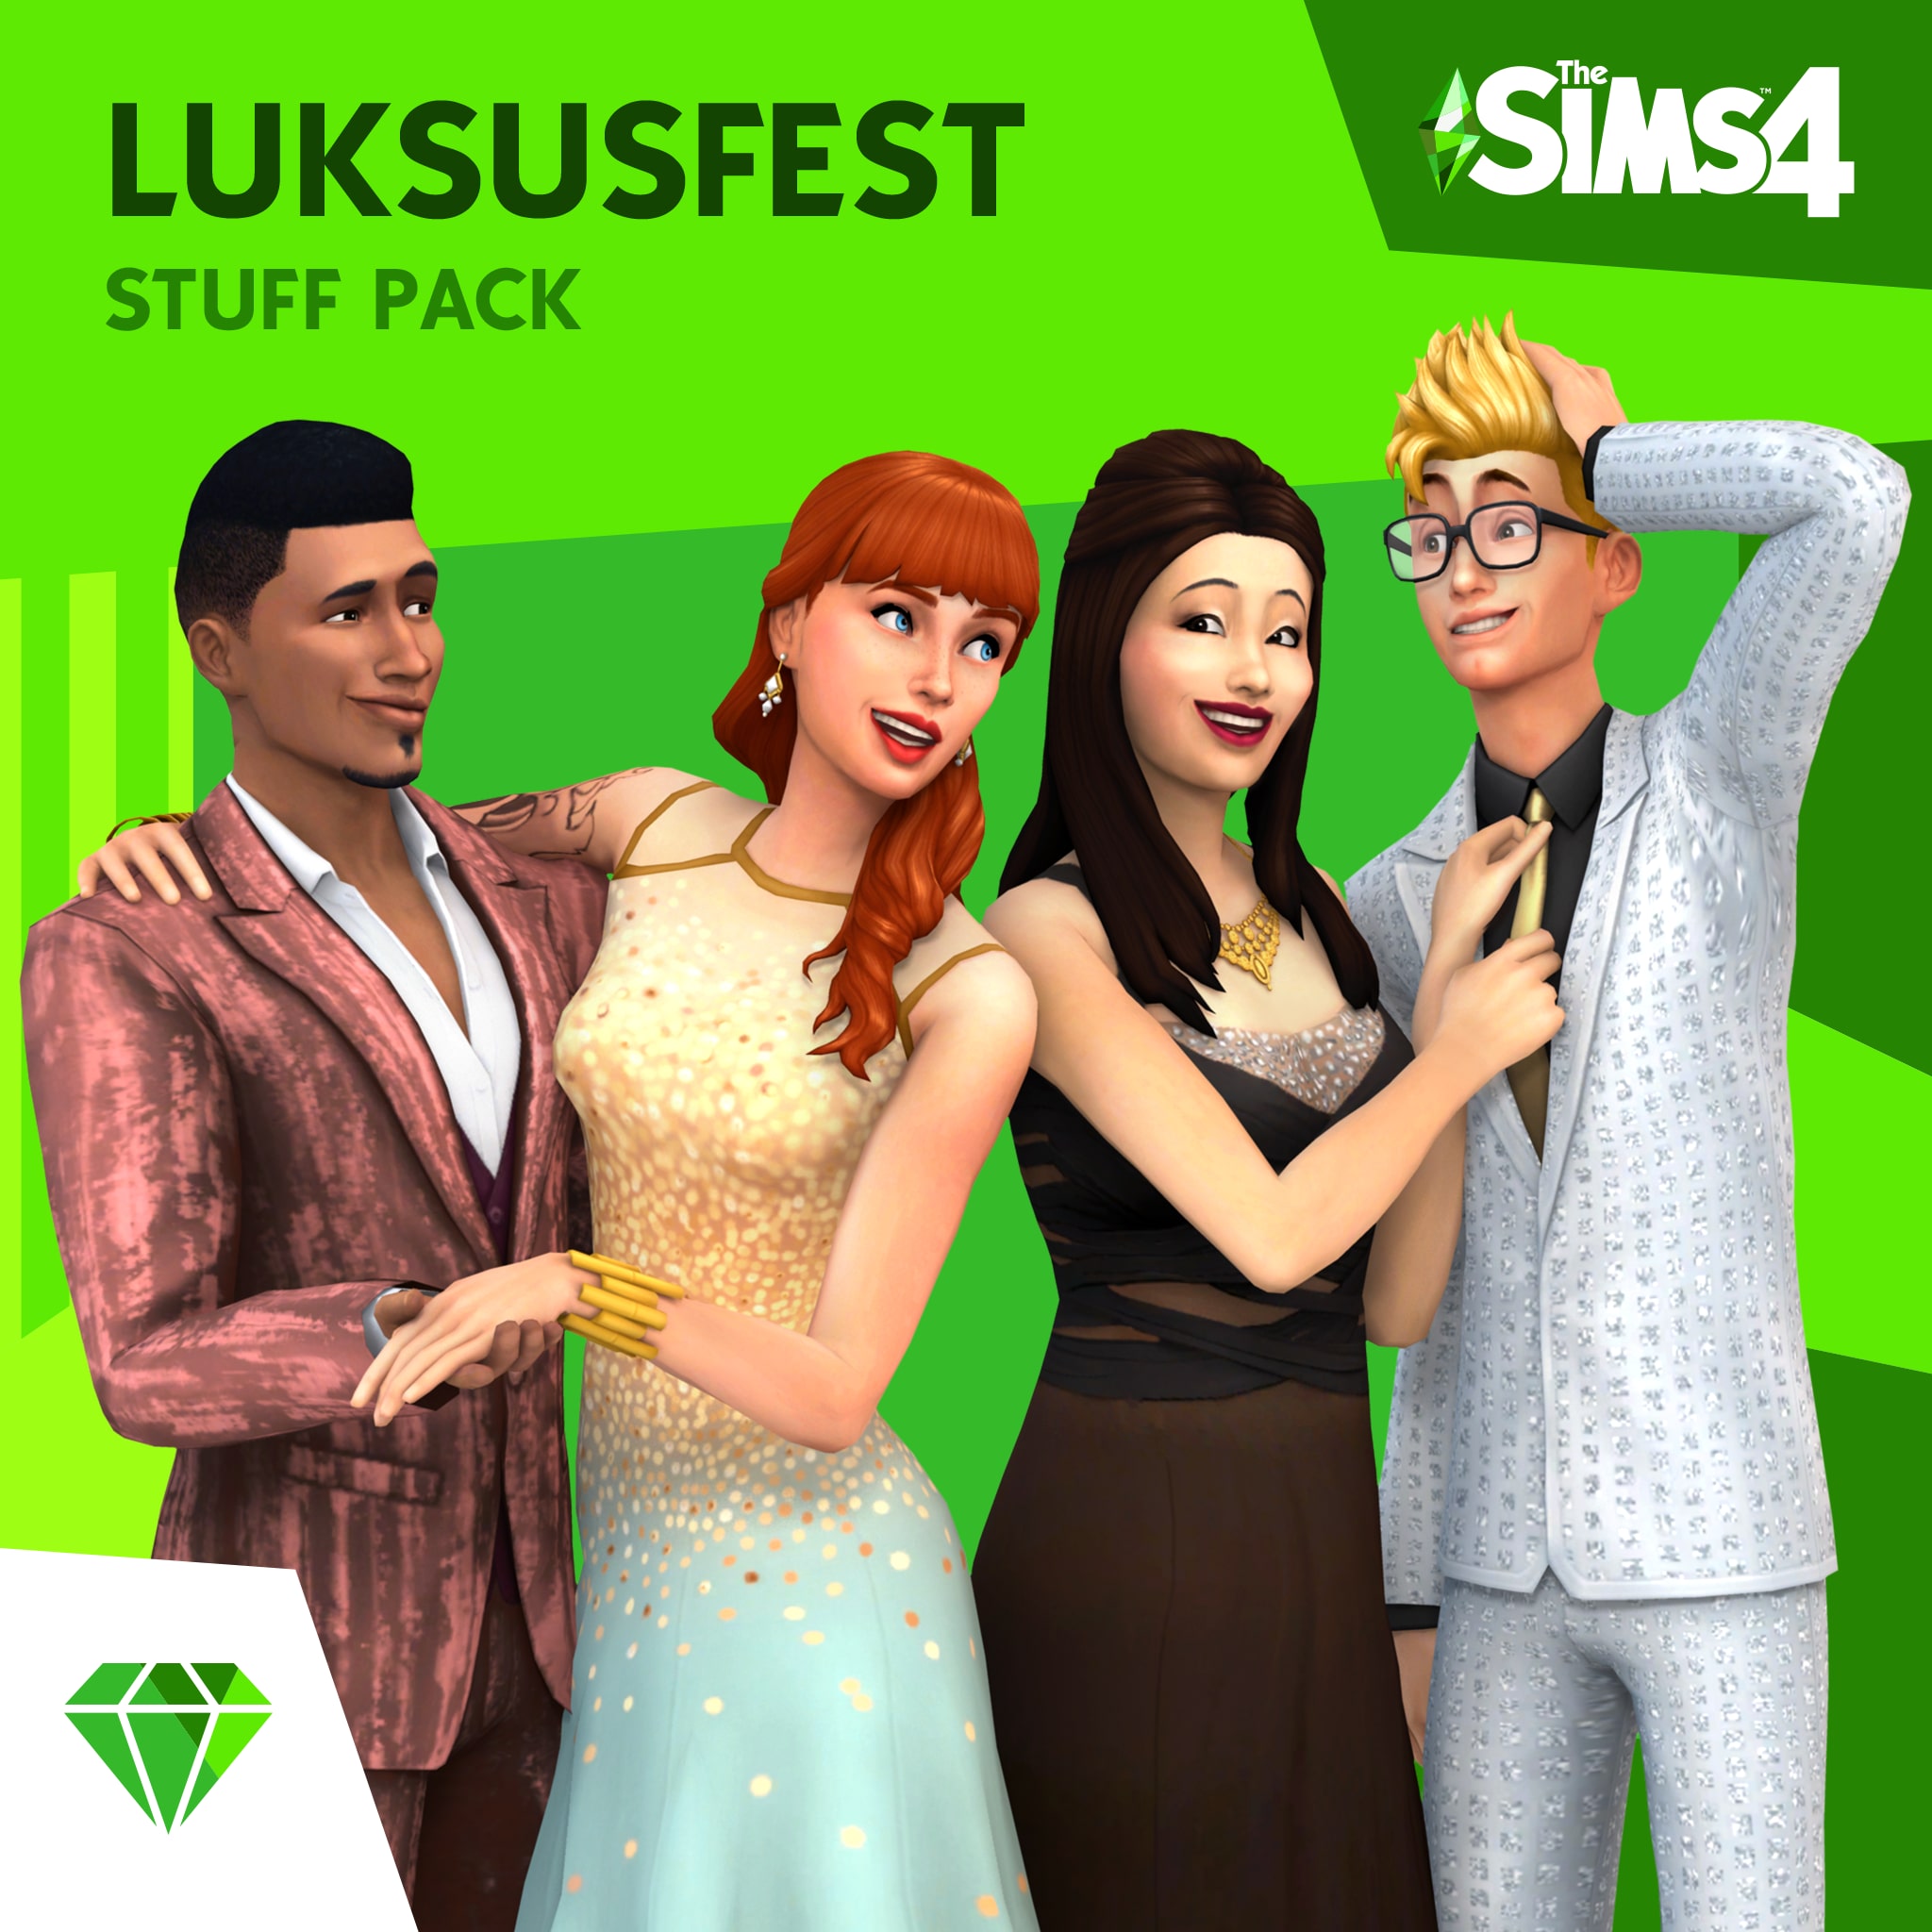 The Sims™ 4 Luksusfest Stuff